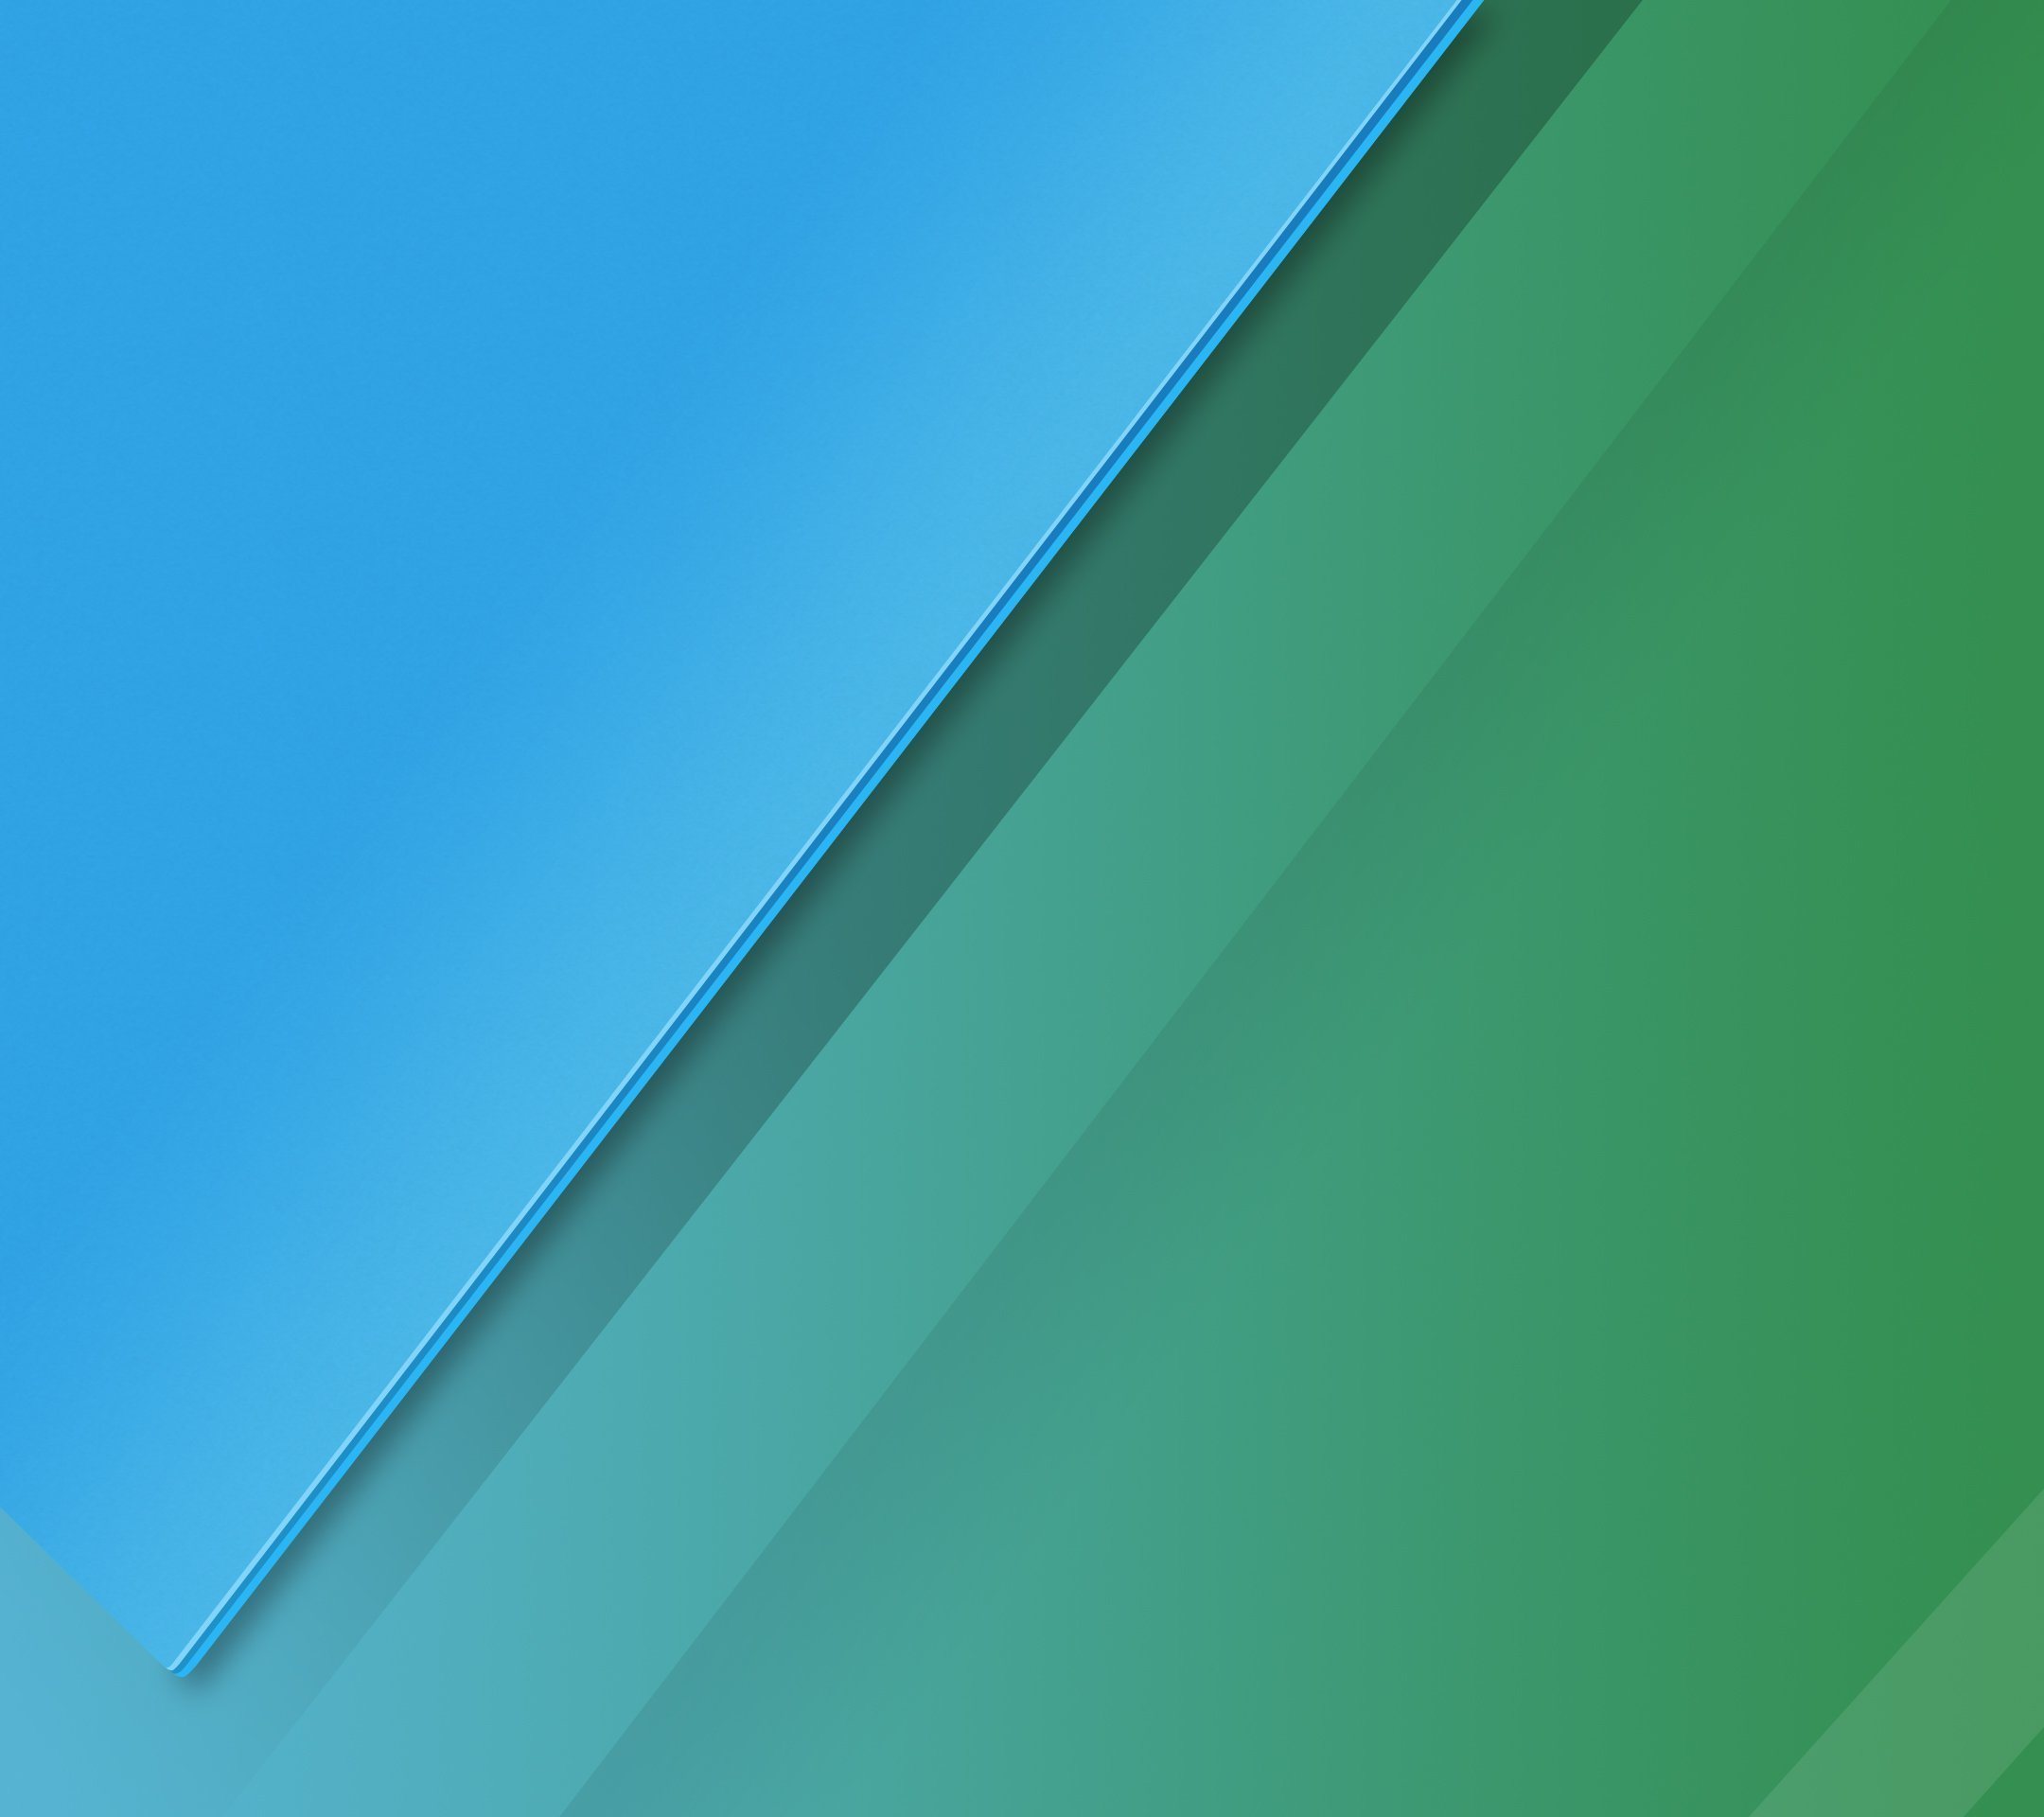 cyanogenmod wallpaper,blue,green,aqua,daytime,turquoise